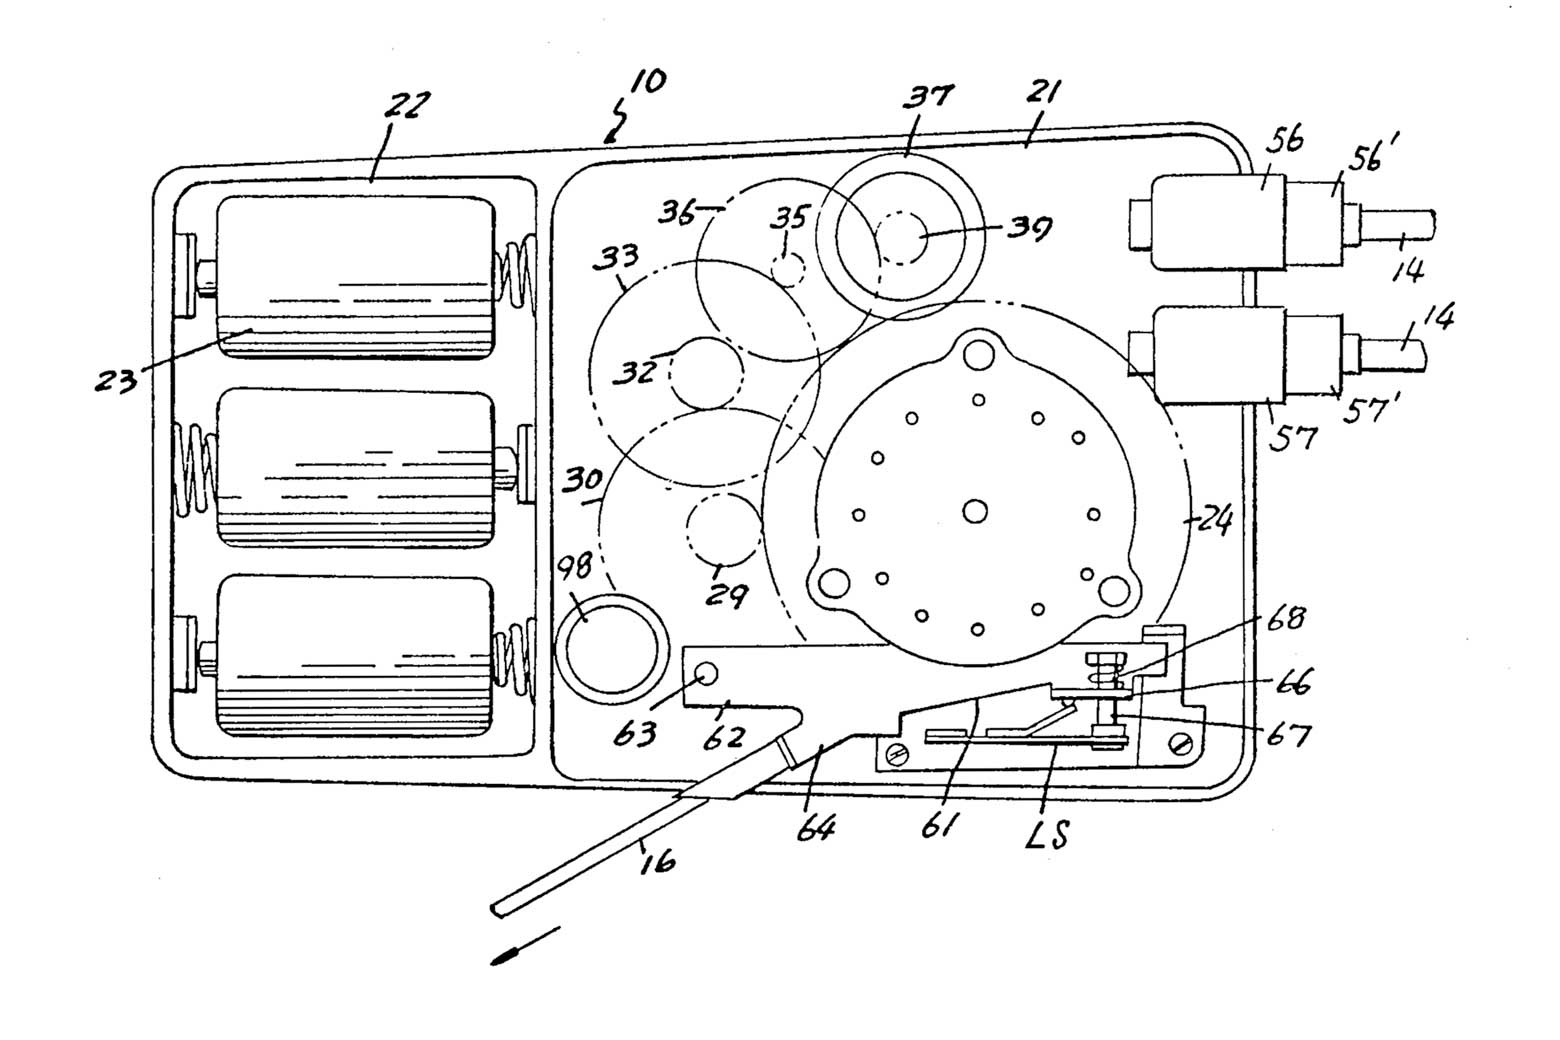 US Patent 4,065,983 - Maruishi main image